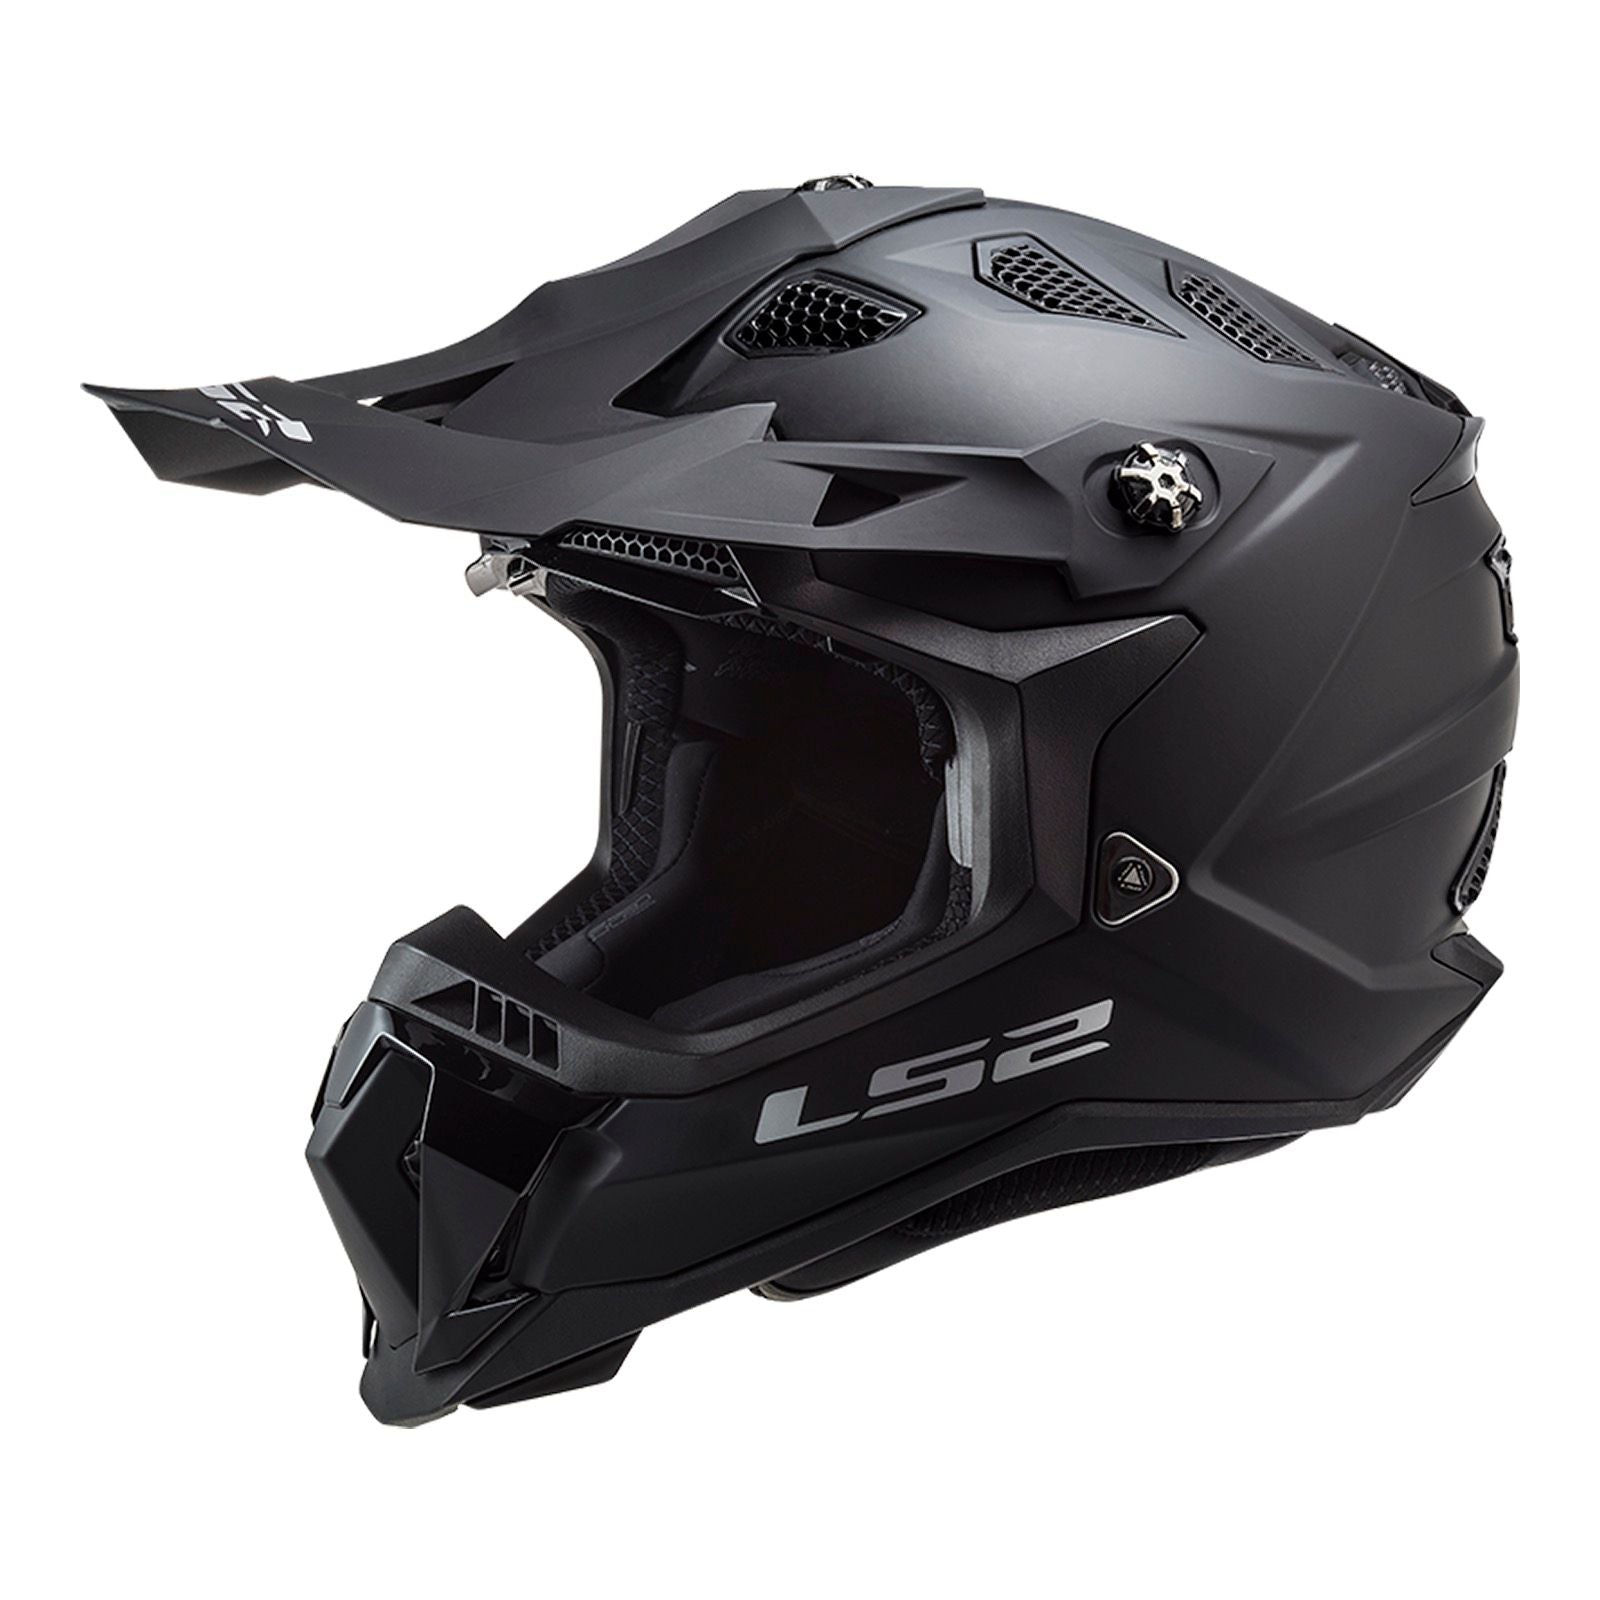 New LS2 MX700 Subverter EVO Noir Helmet - Matte Black (3XL) #LS2MX700SOLMB3XL